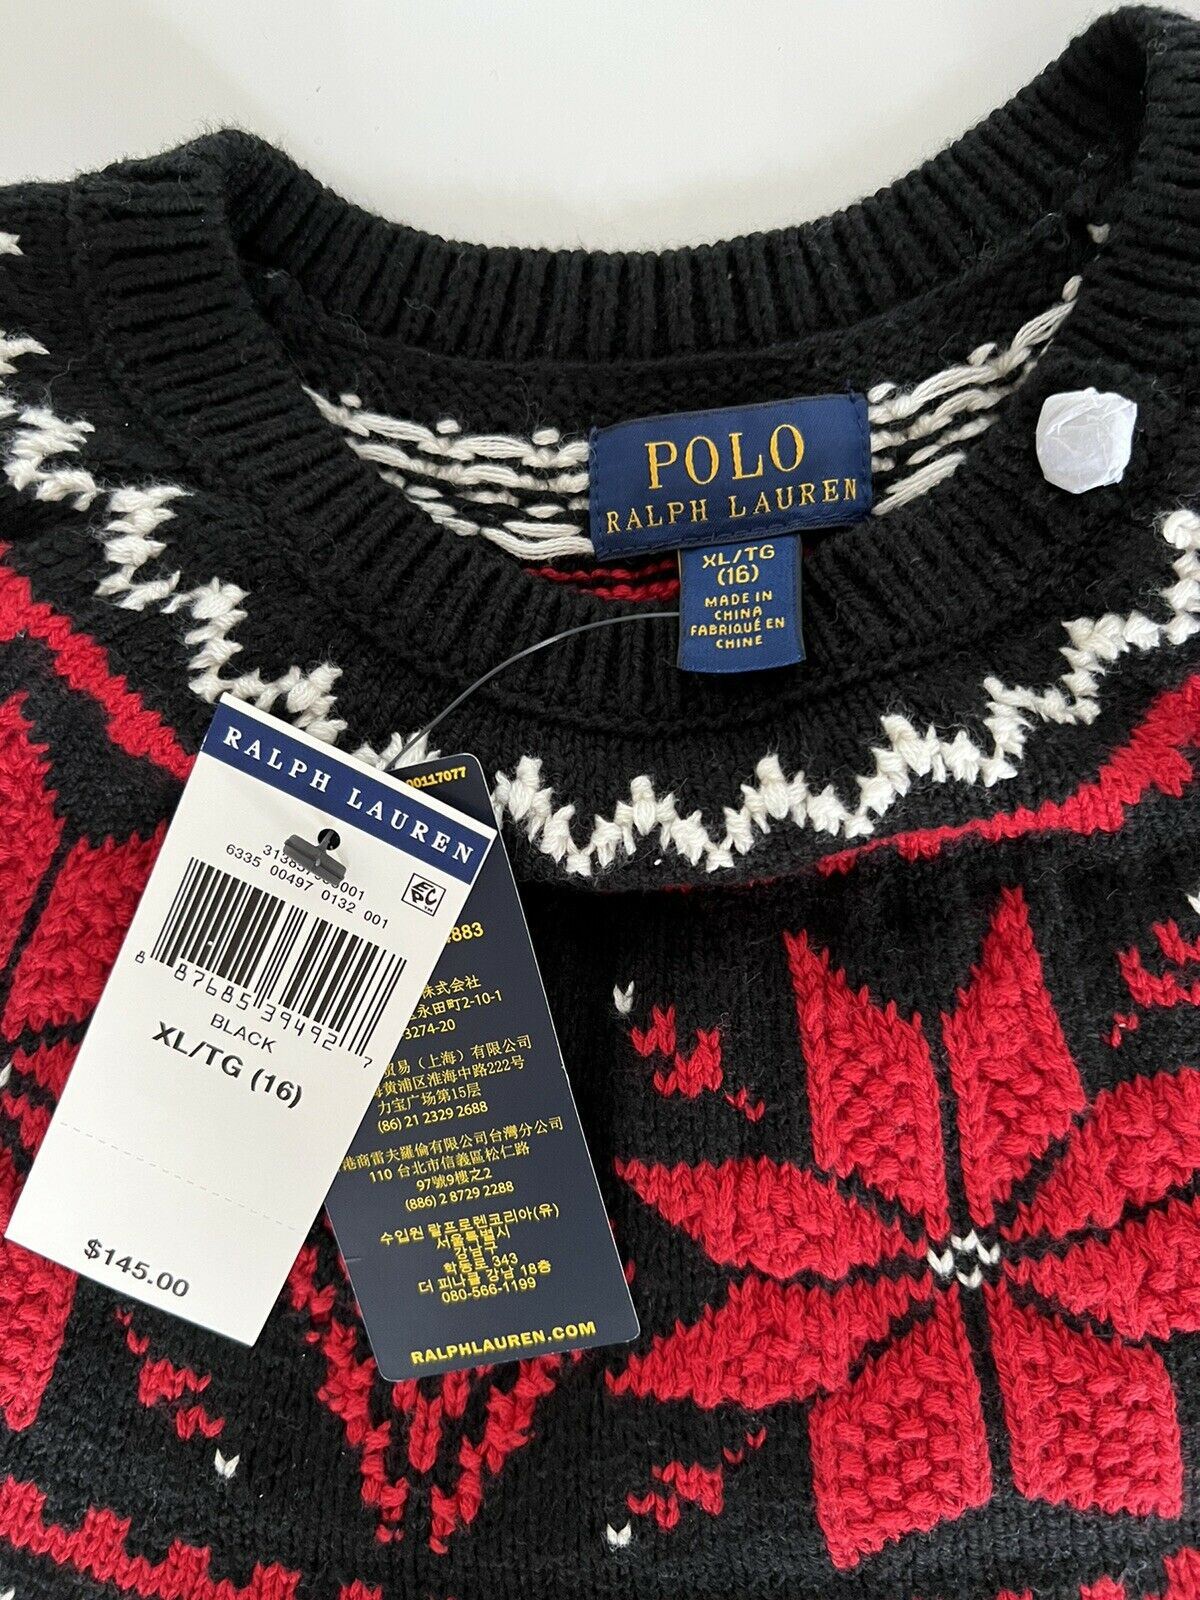 NWT $145 Polo Ralph Lauren Girls Black Let it Snow Cotton Sweater Size XL (16)